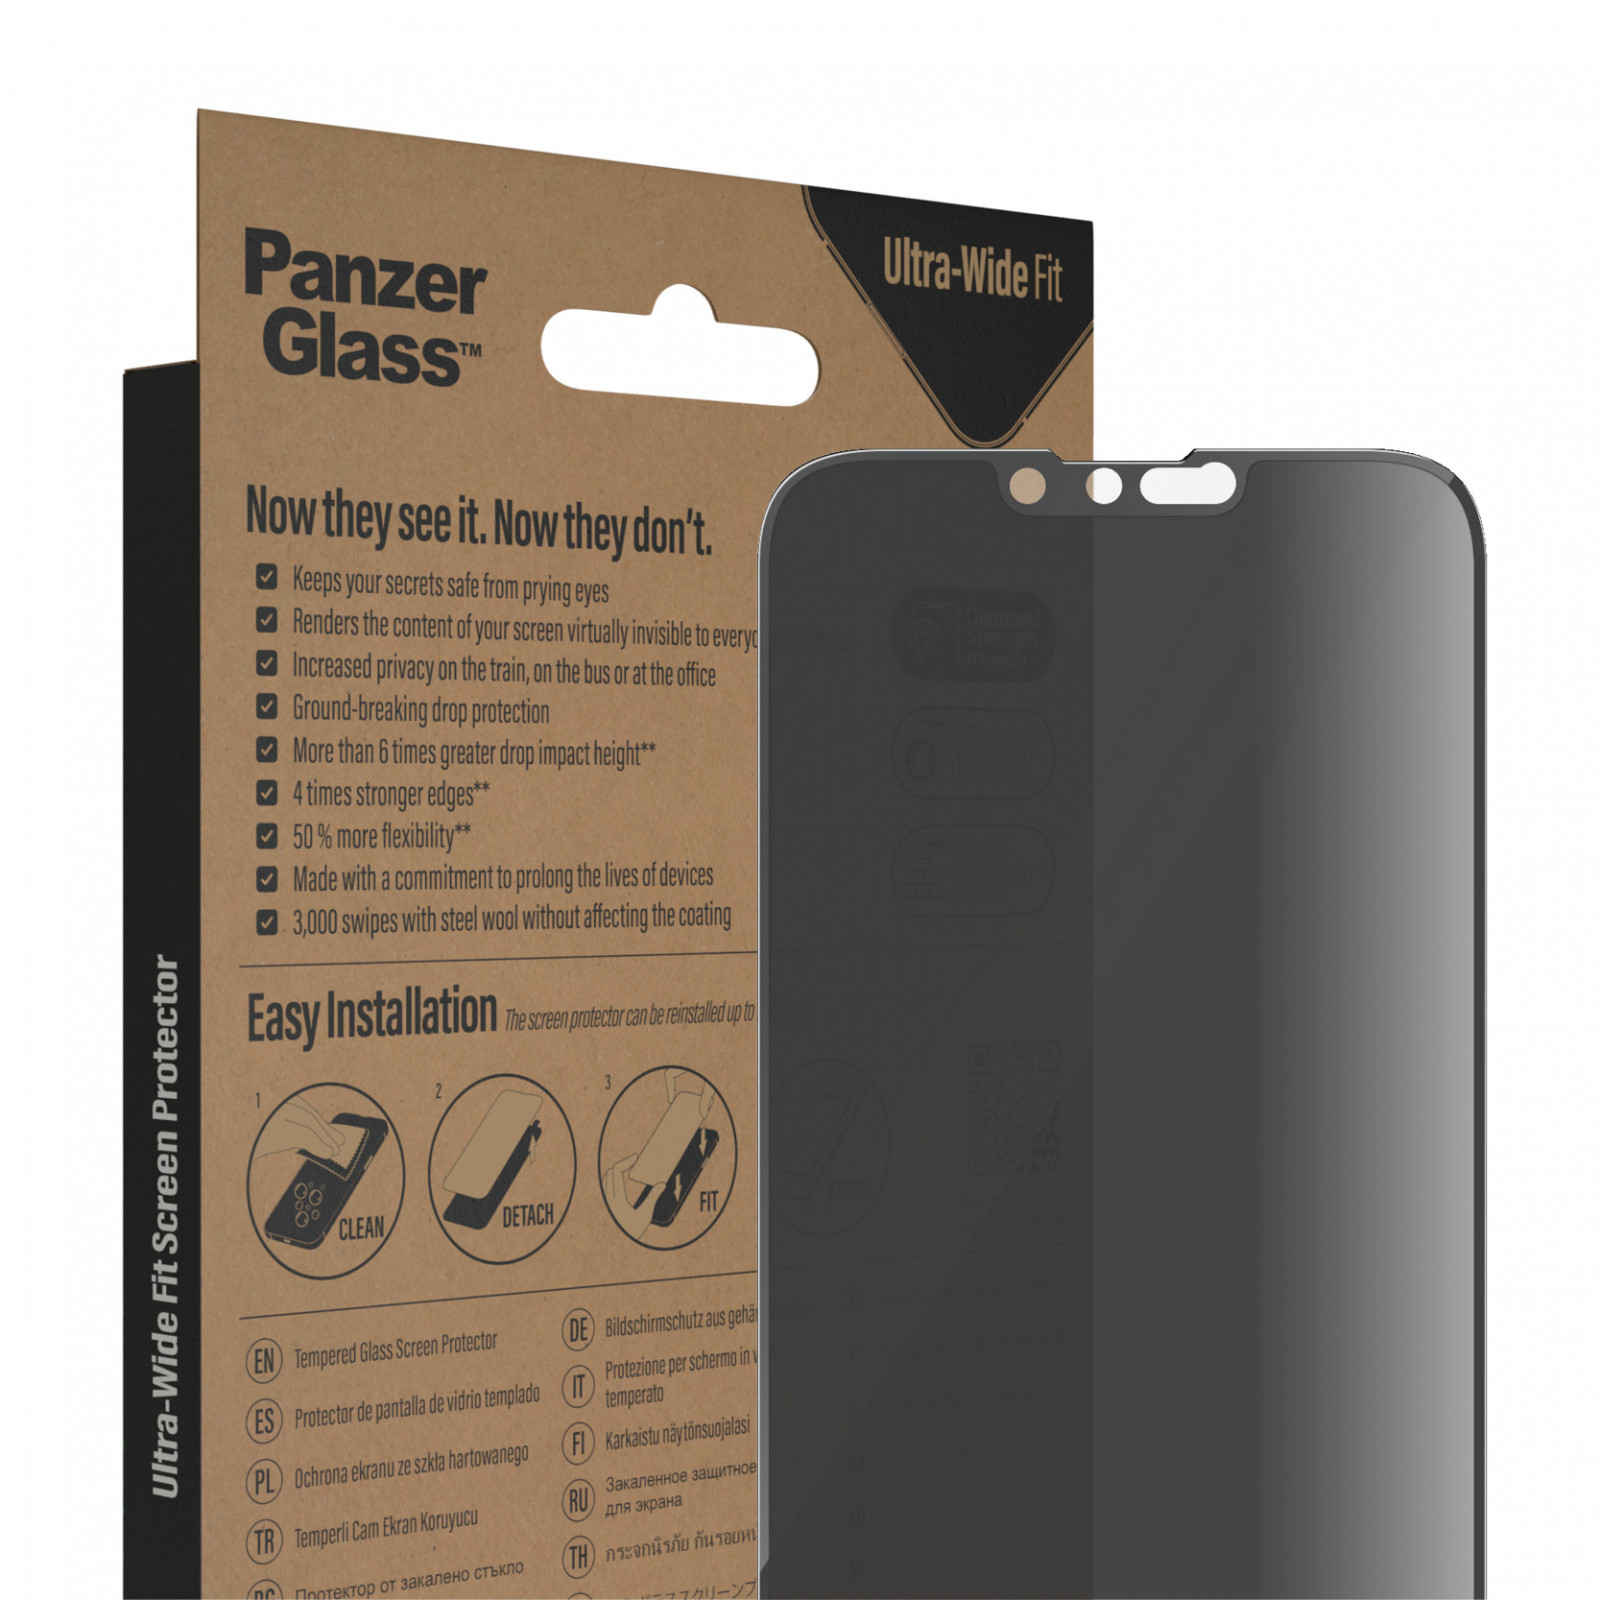 Стъклен протектор PanzerGlass за Apple Iphone 14 Plus / 13 Pro Max, UWF, Privacy, Antibacterial - Черен